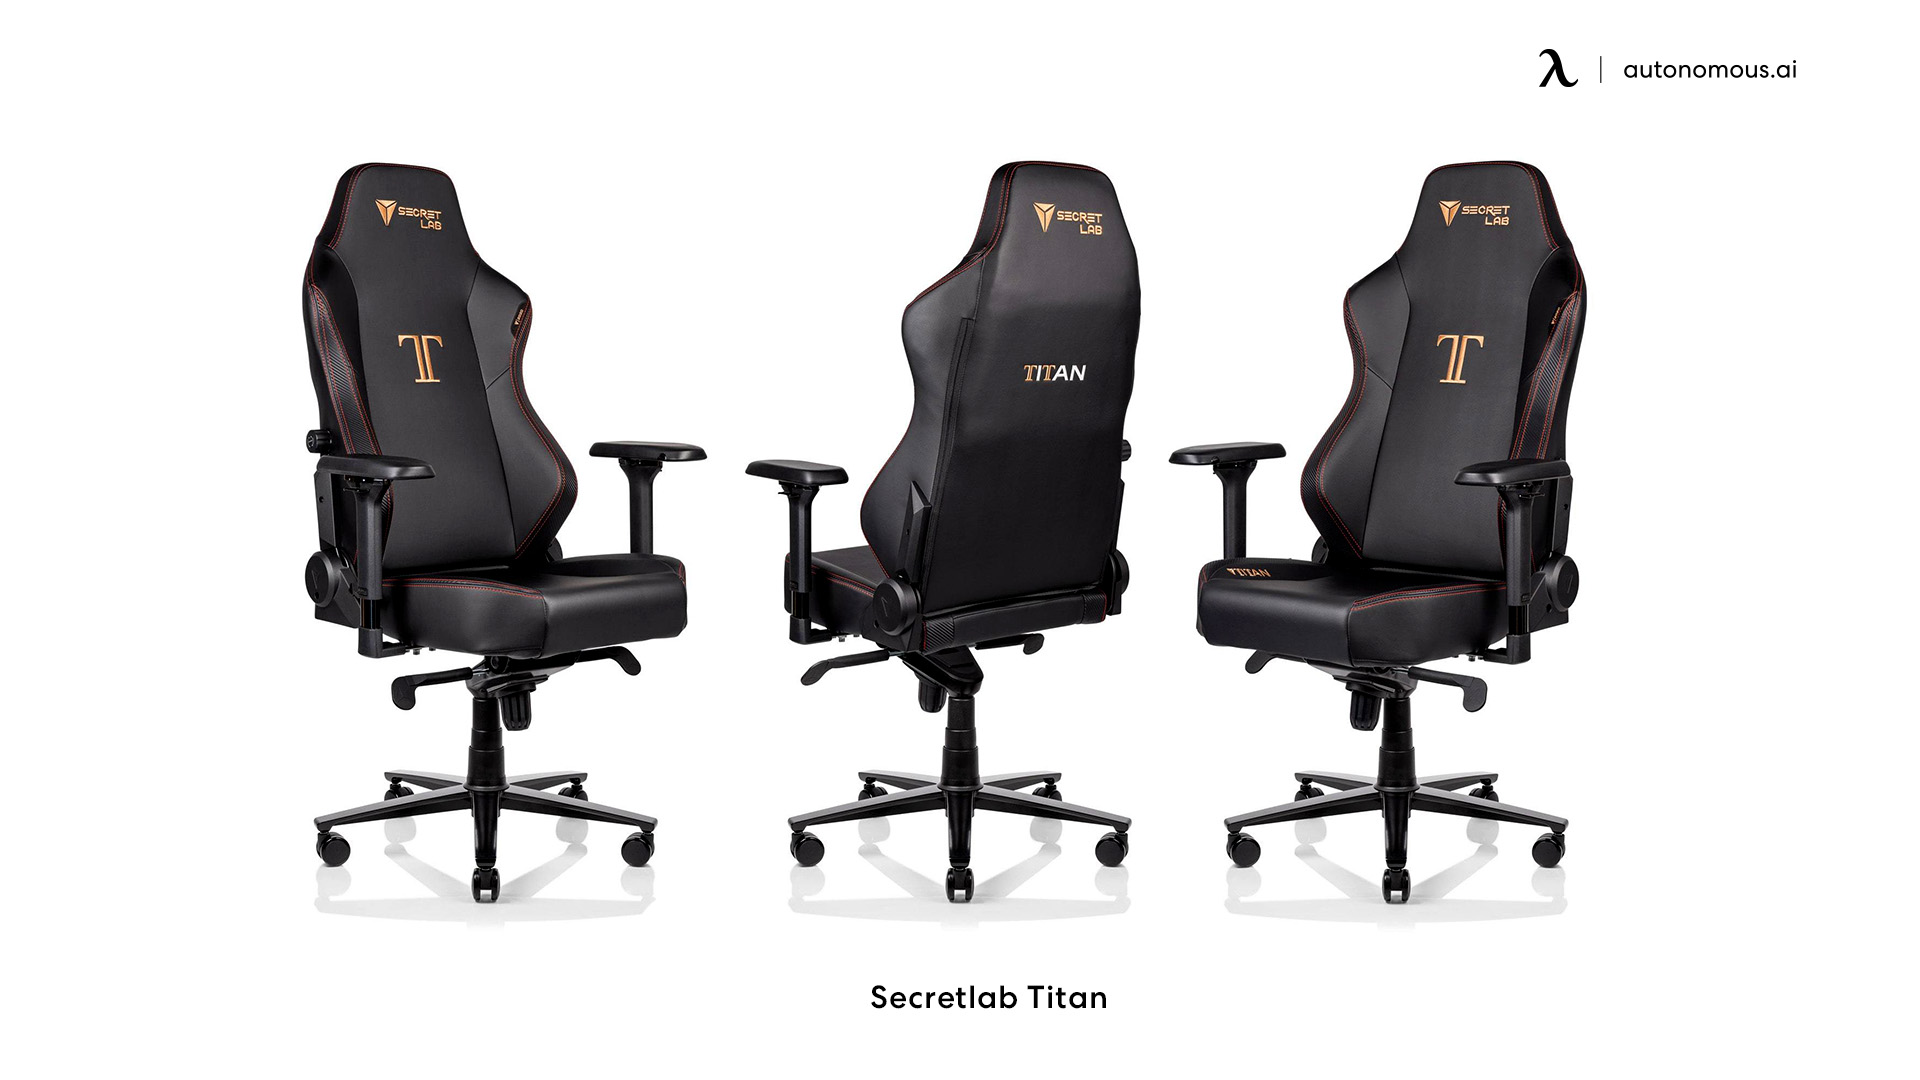 Secretlab Titan heavy duty computer chair